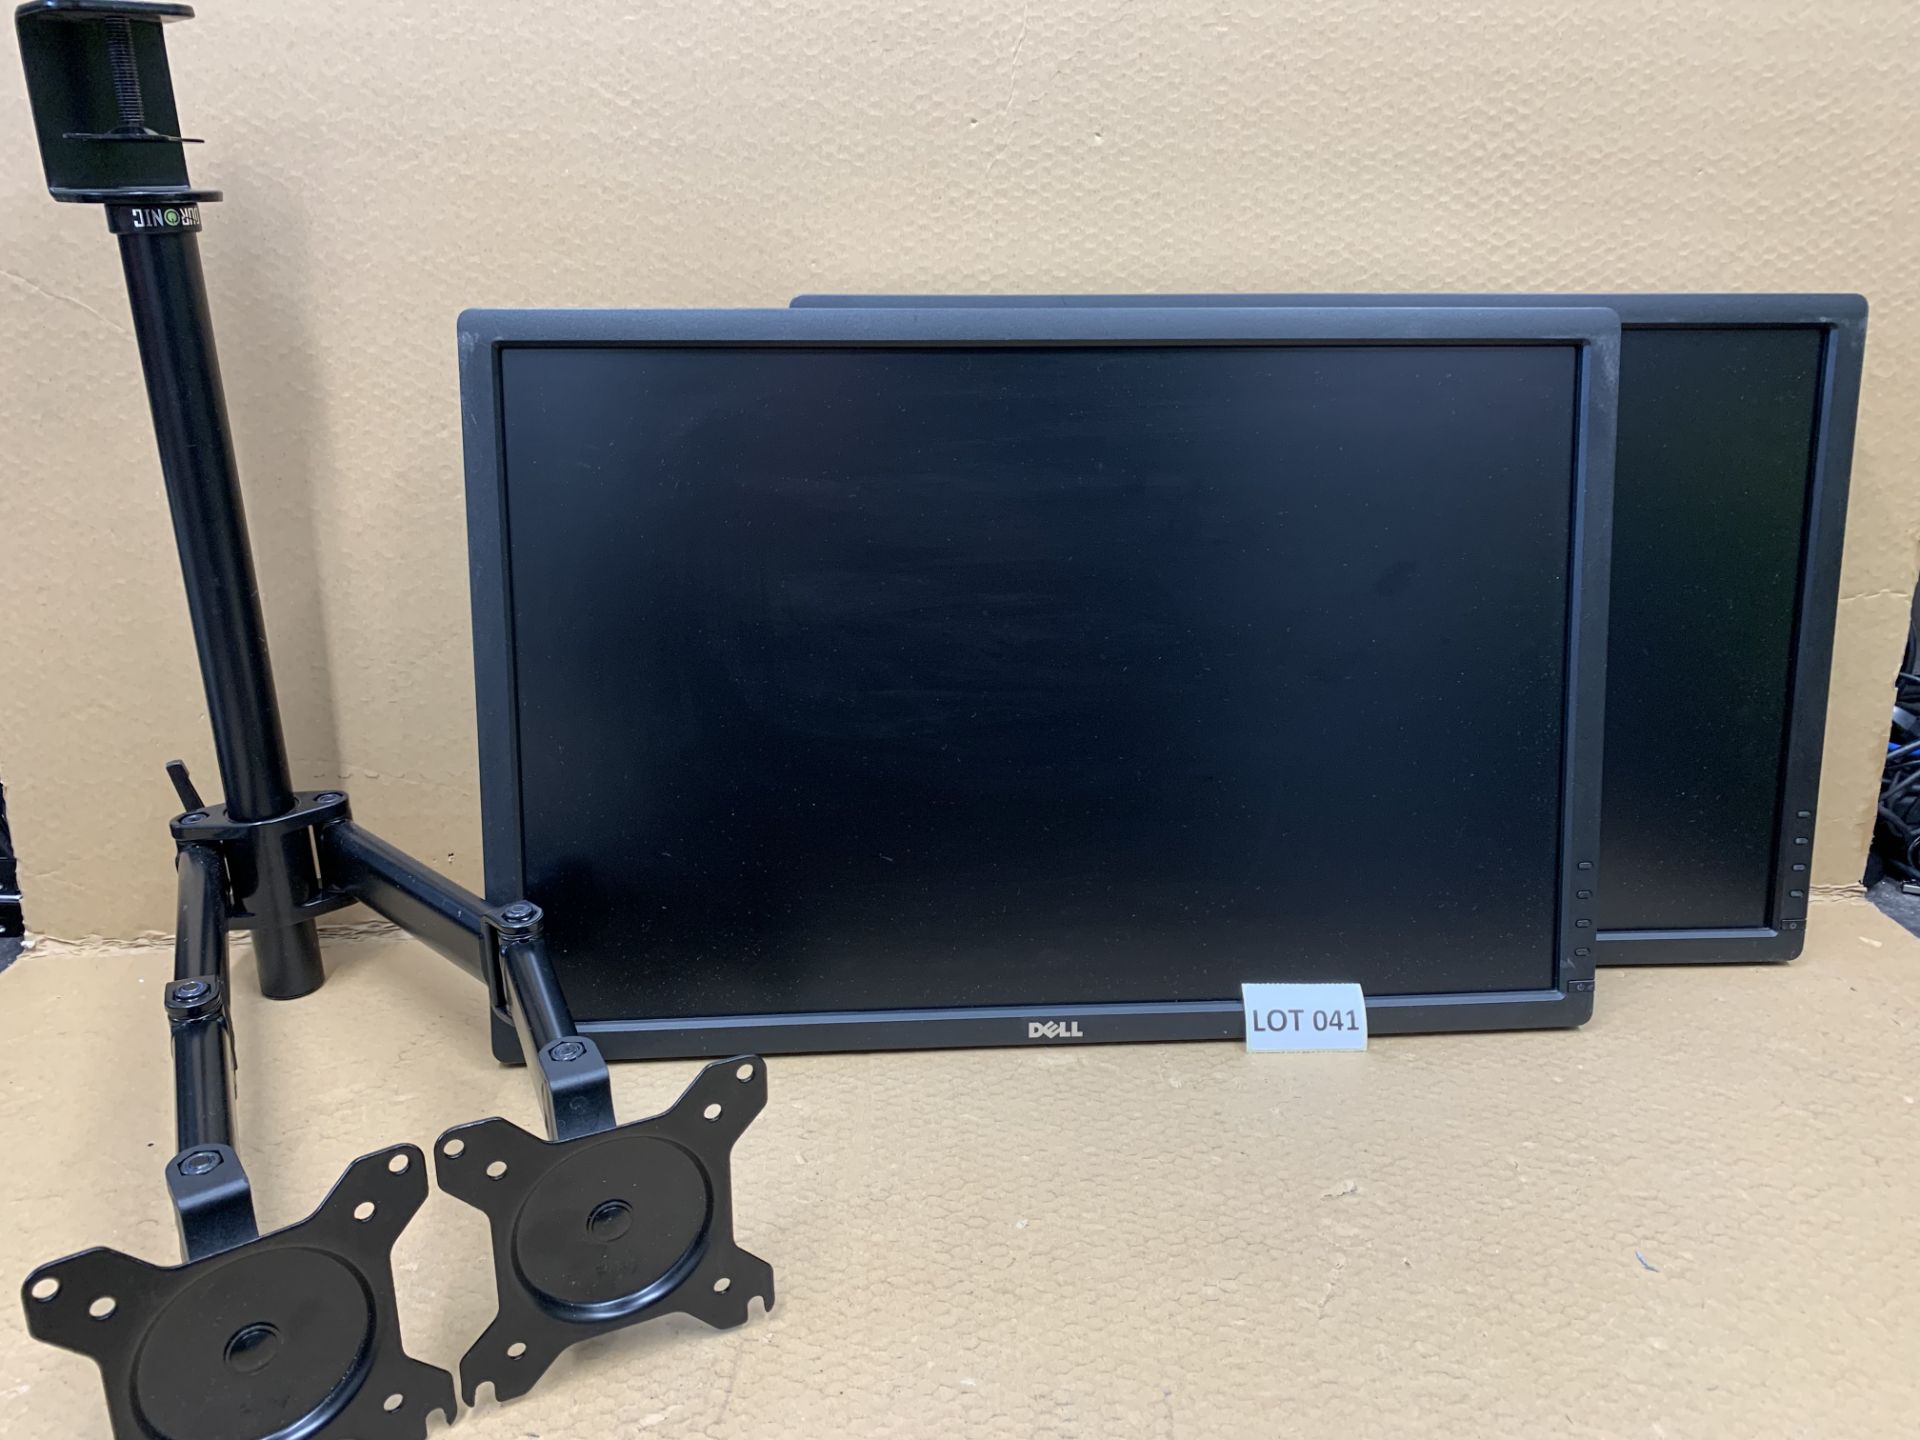 2 Dell U2412M 24in Monitors-1920x1200 resolution, DP, DVI-D and VGA with twin monitor desk mount.